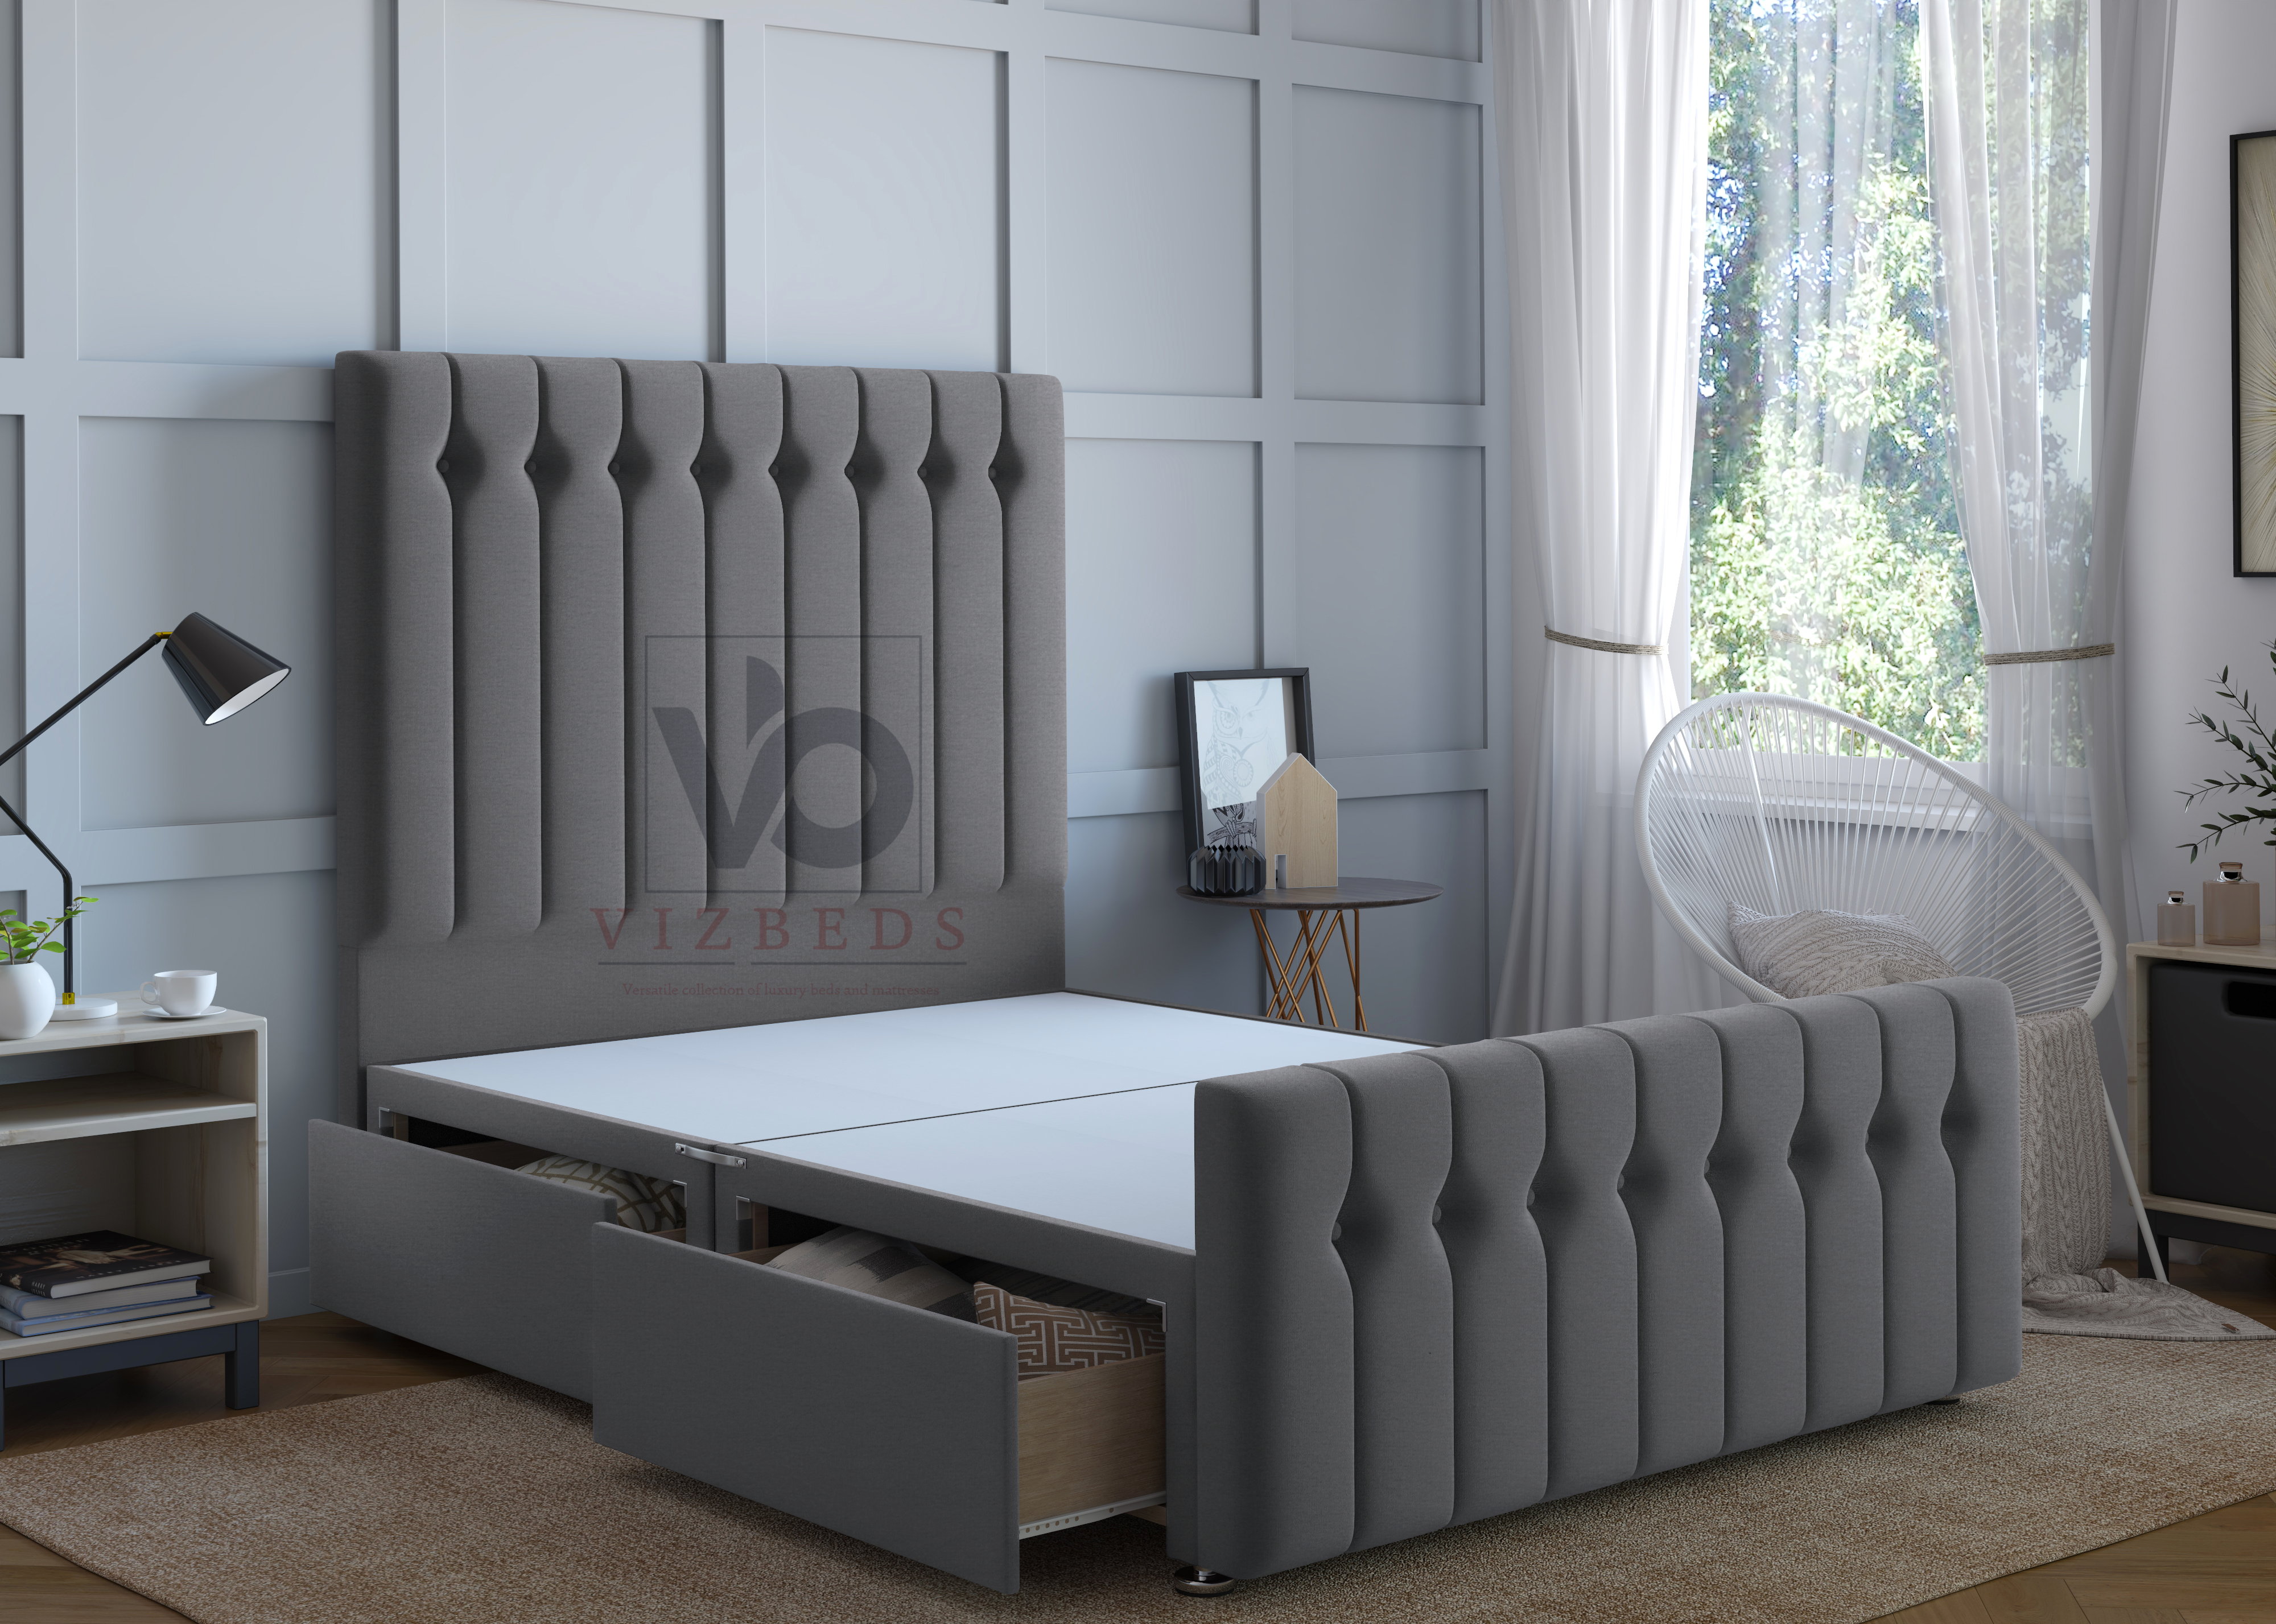 Luxury Starla Divan Bed Set With Luxury Headboard